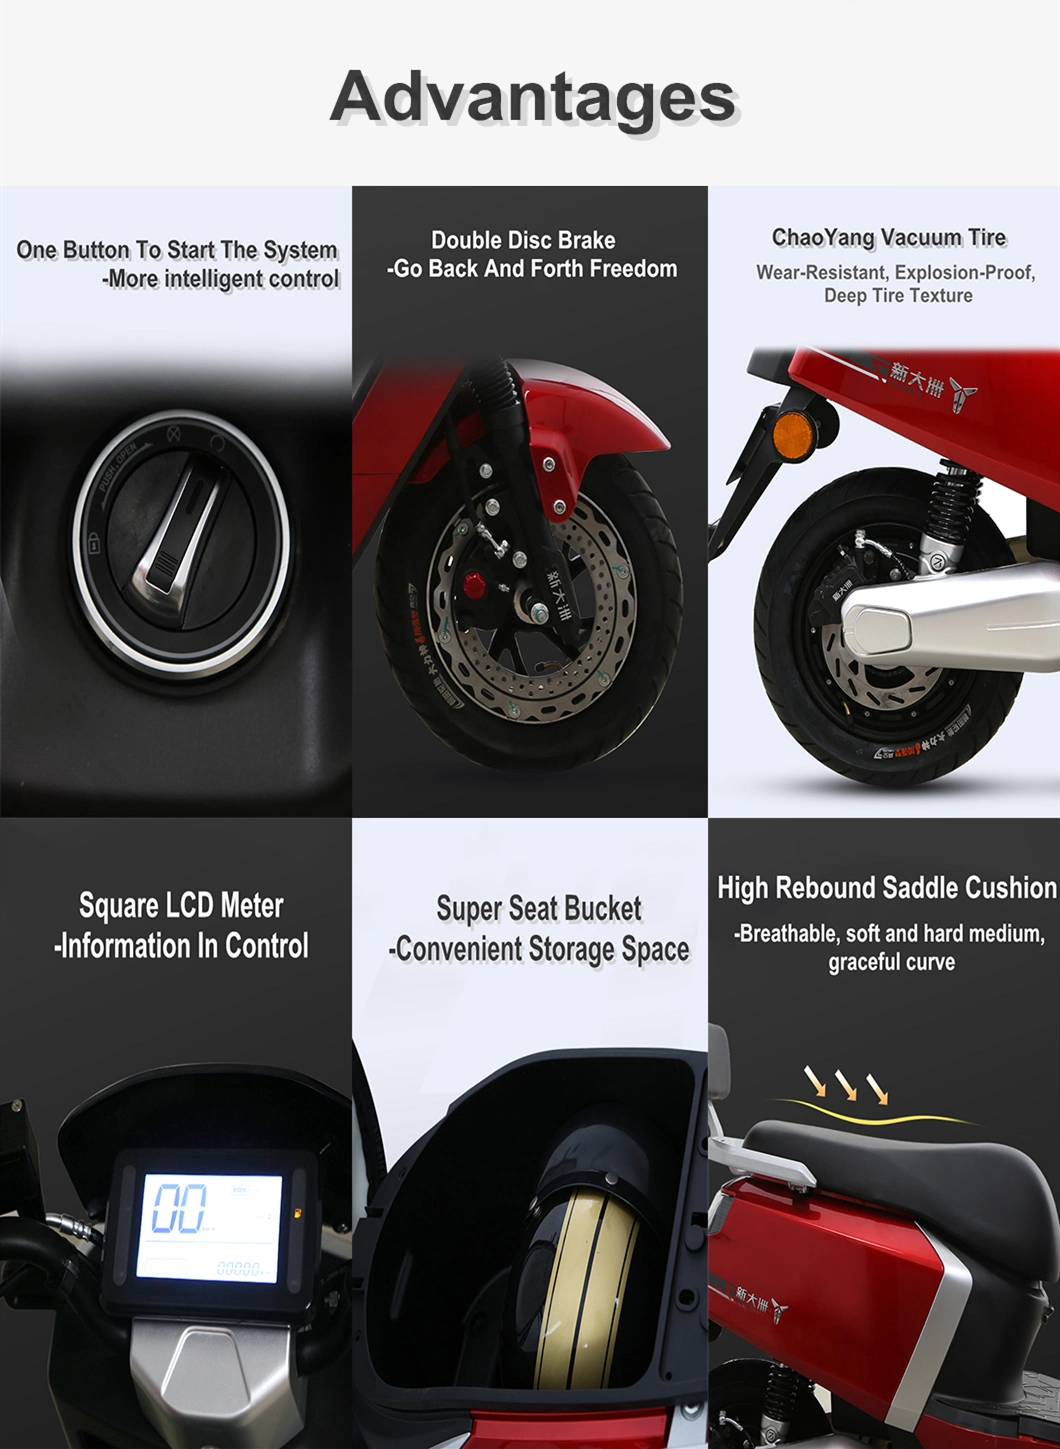 Adult Waterproof Electric Motorcycle/Electric Bike/ 2 Wheel Motorcycle Manufacturer